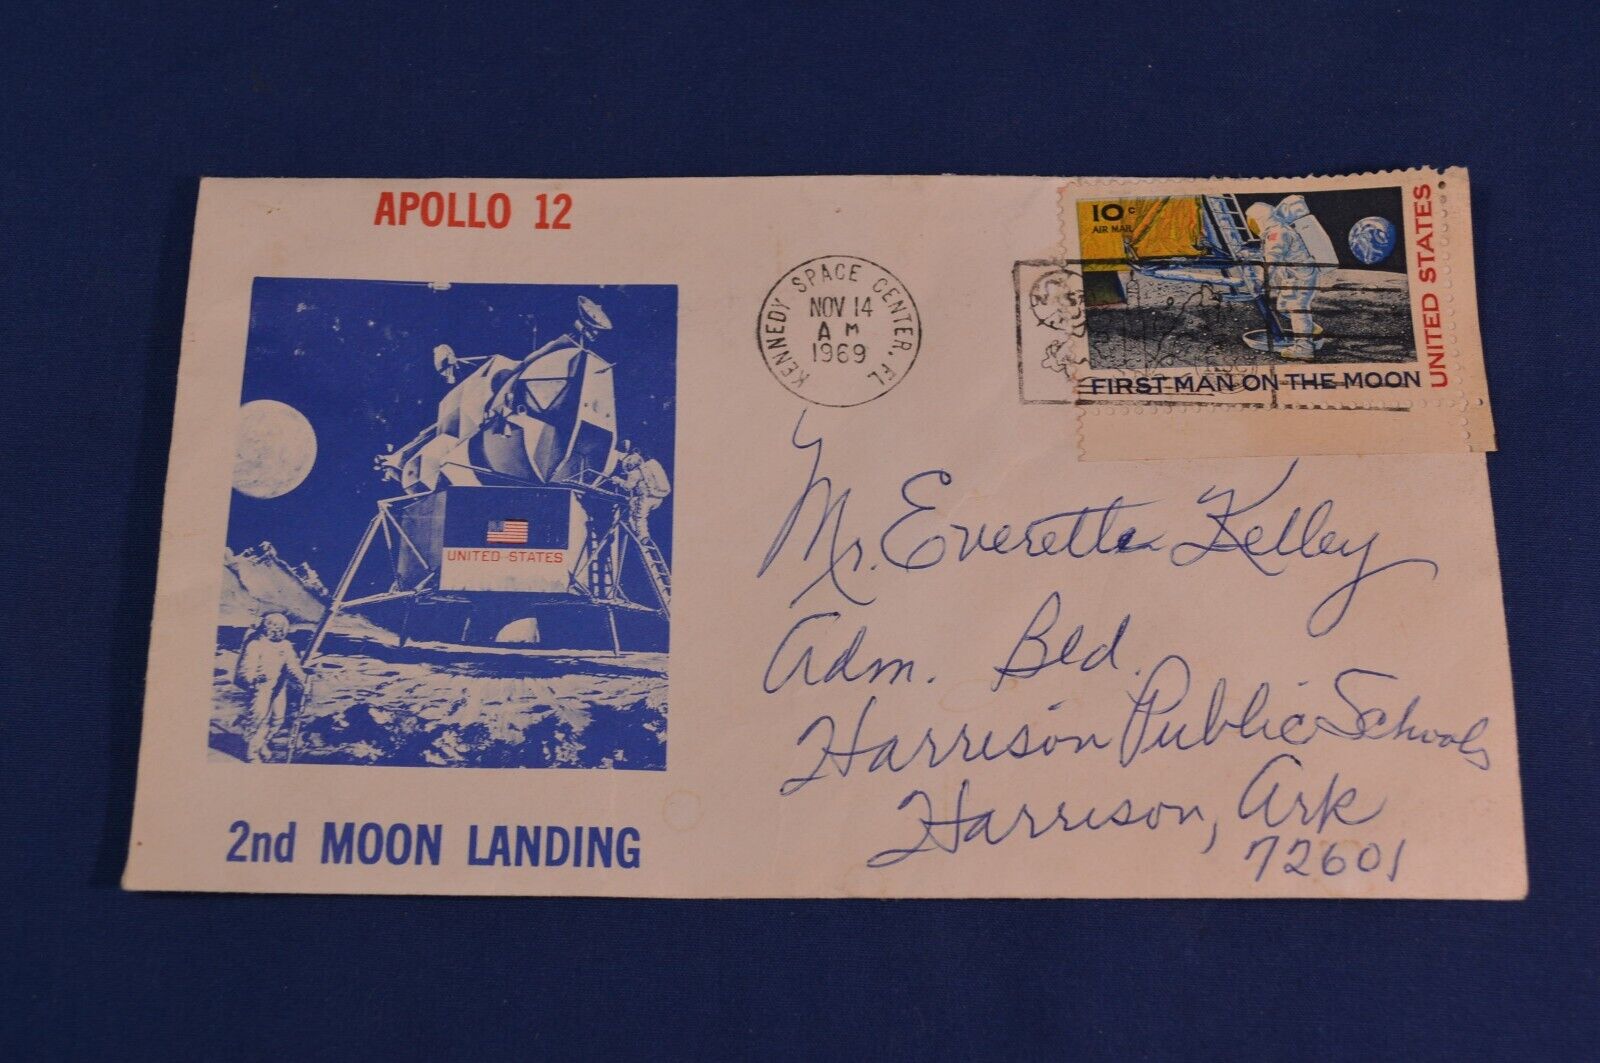 Apollo 12 2nd Moon Landing Stamped Envelope Nov 14 1969 Kennedy Space Center